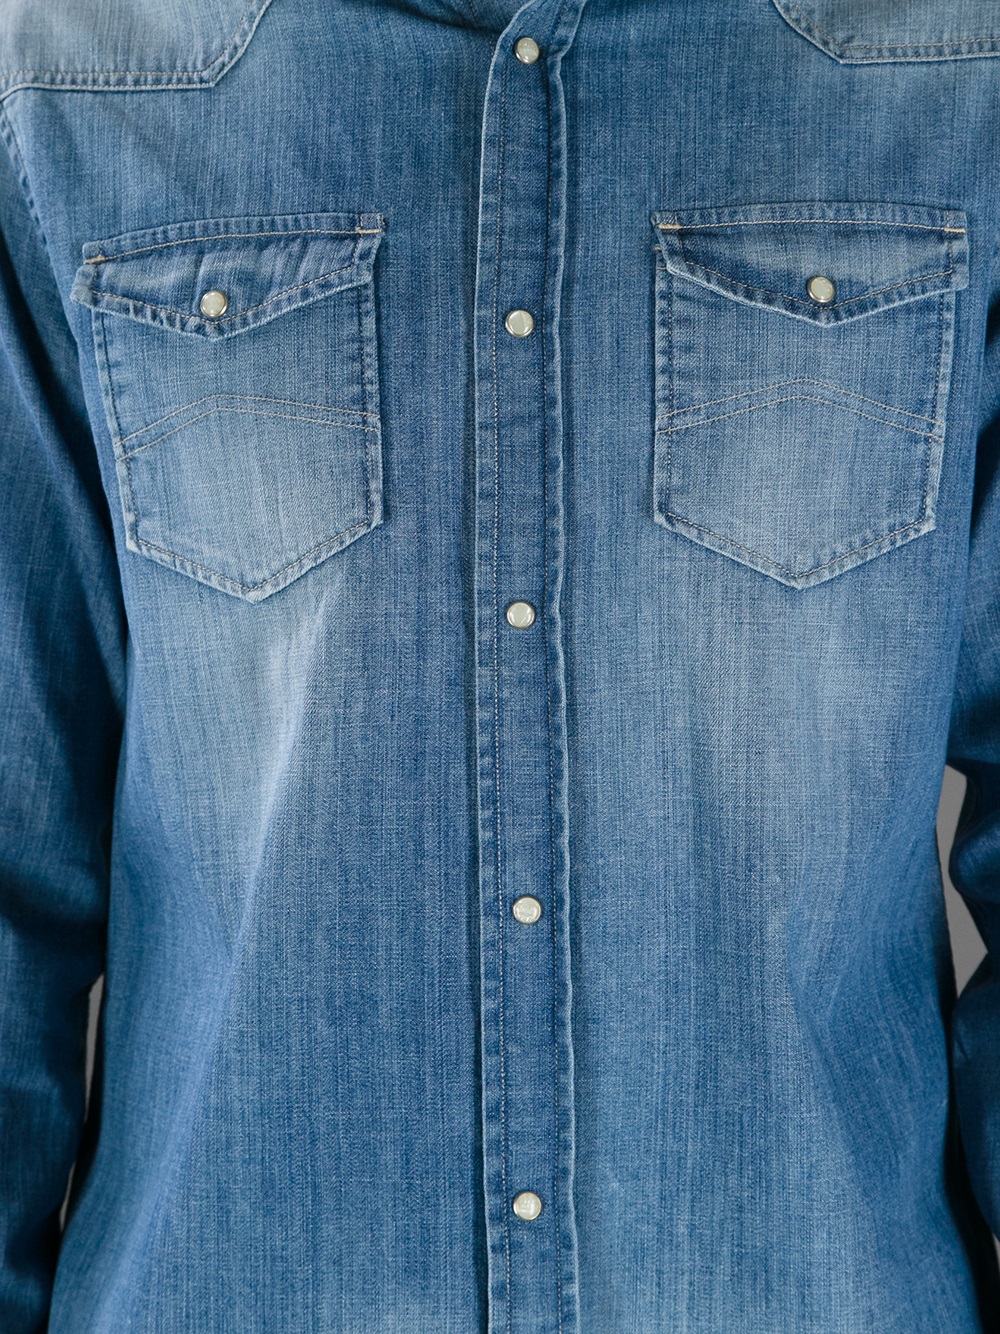 Armani Jeans Denim Shirt in Blue for Men - Lyst